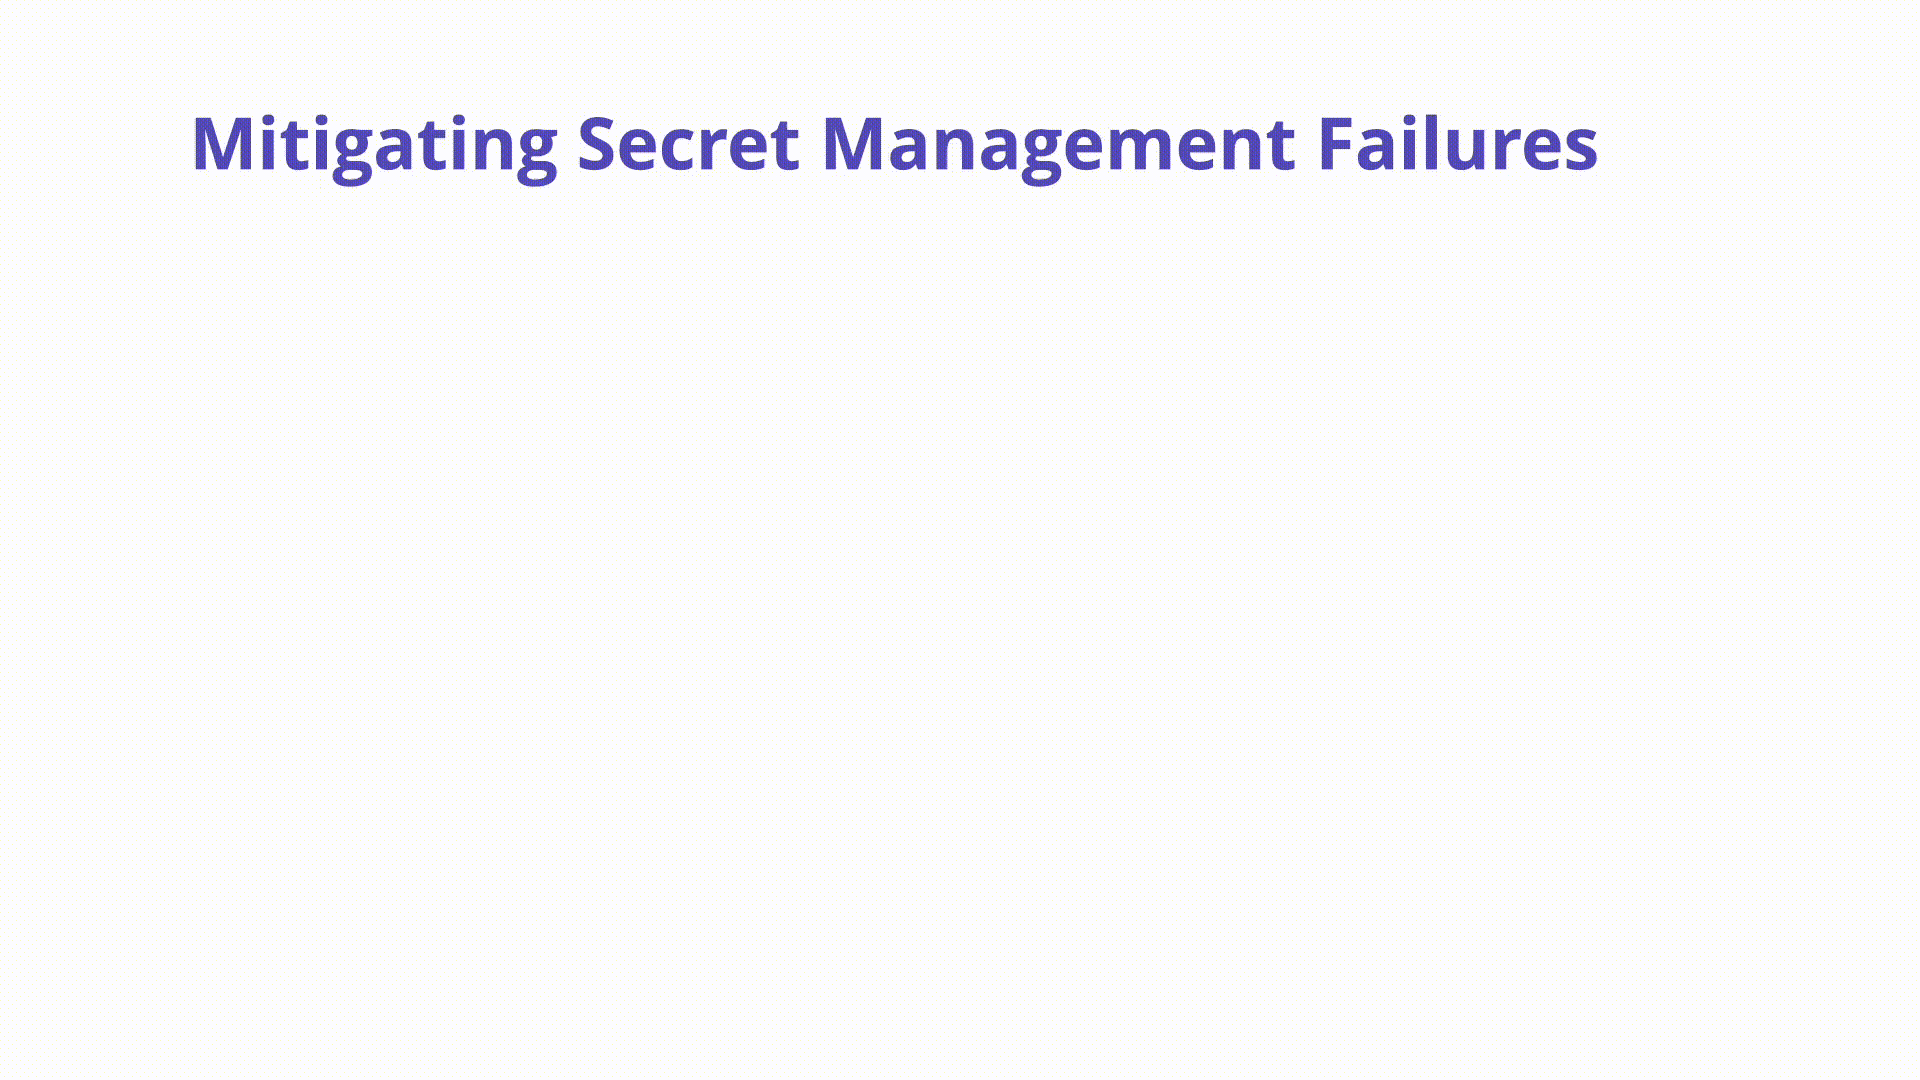 Secrets Management -
Mitigations